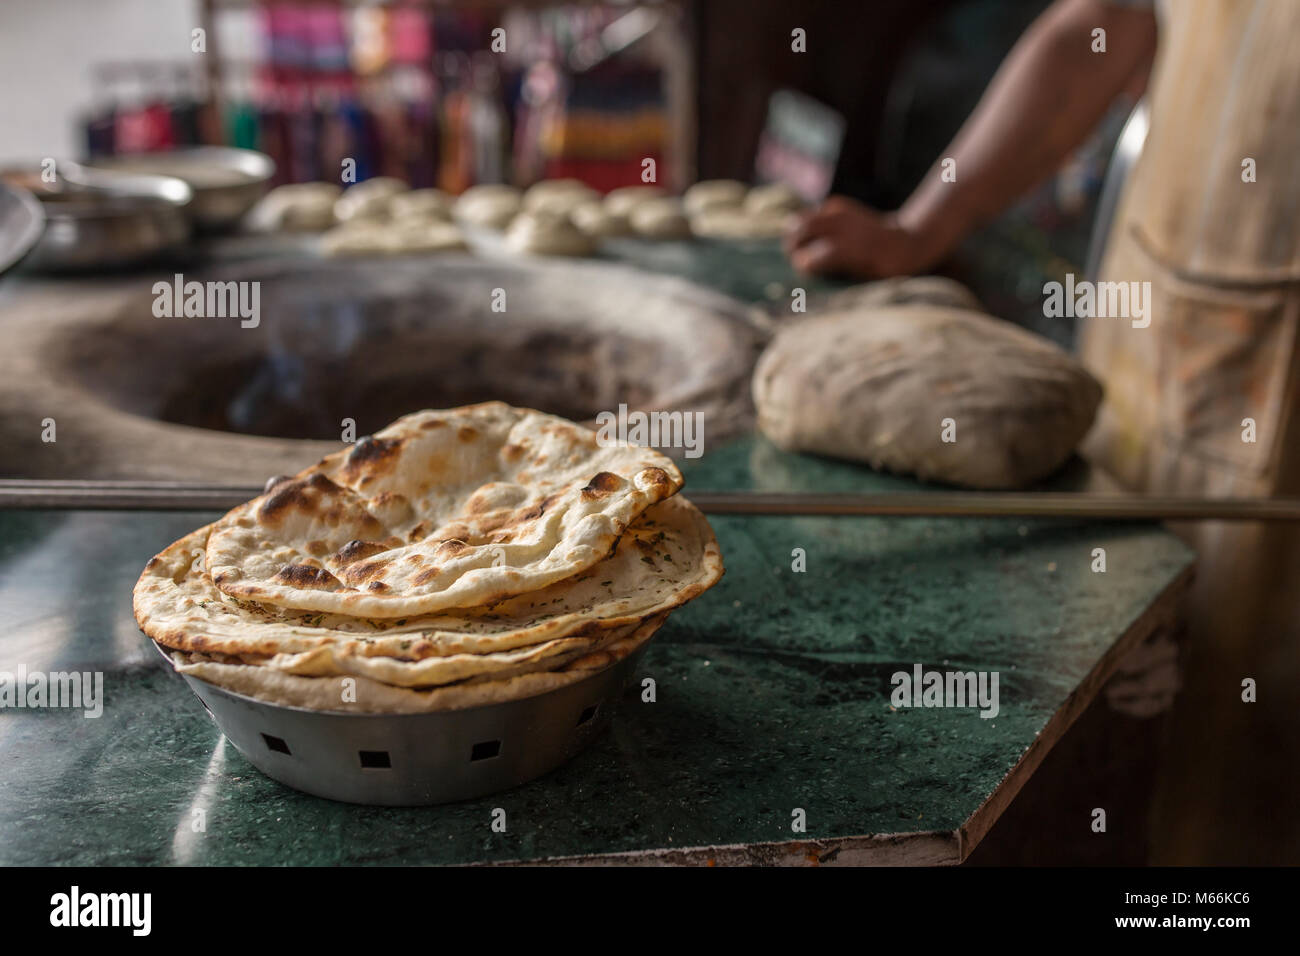 Tandoori naan or roti - indian flat bread baked in clay oven Stock Photo